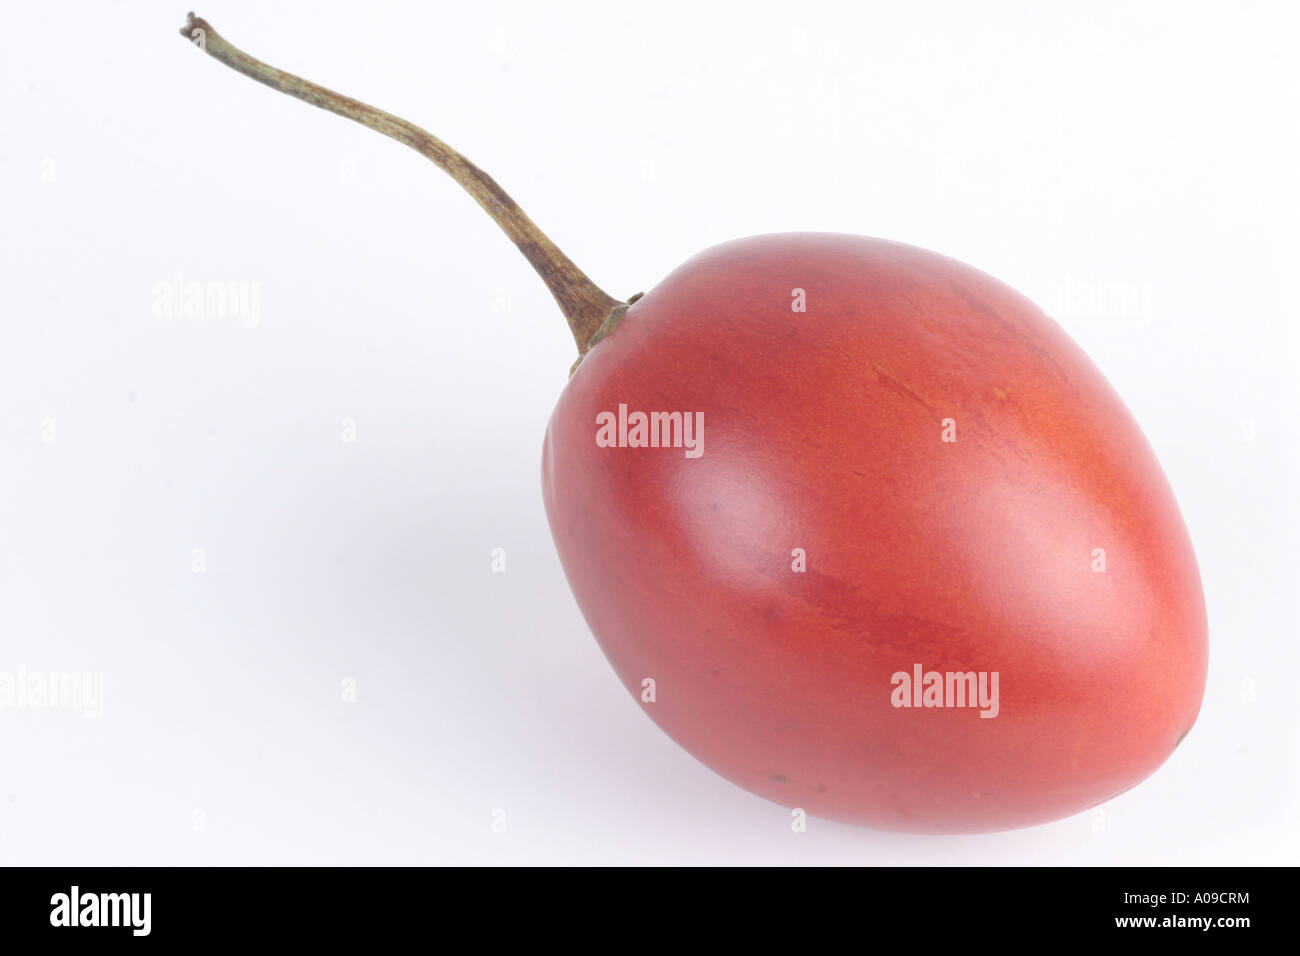 tree tomato (Cyphomandra betacea, Cyphomandra crassicaulis), fruit, distribution: South America Stock Photo